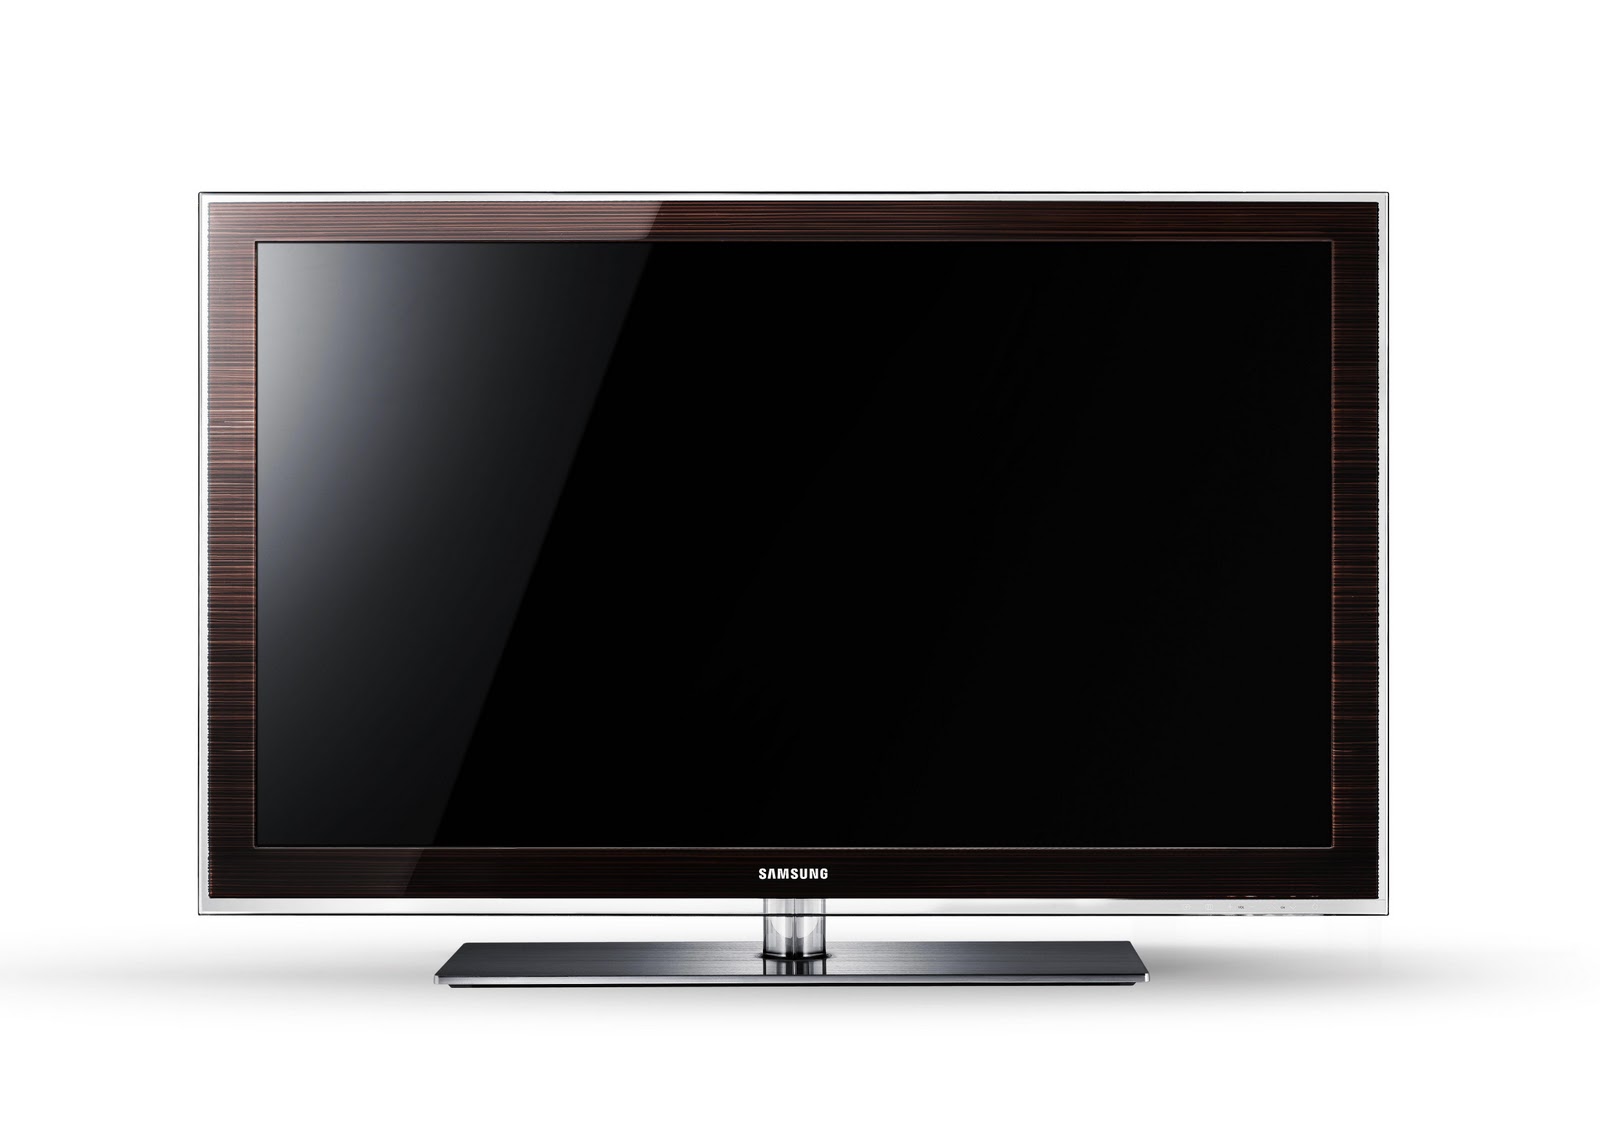 Samsung 3d Led Tv HD Wallpaper New Technology Information